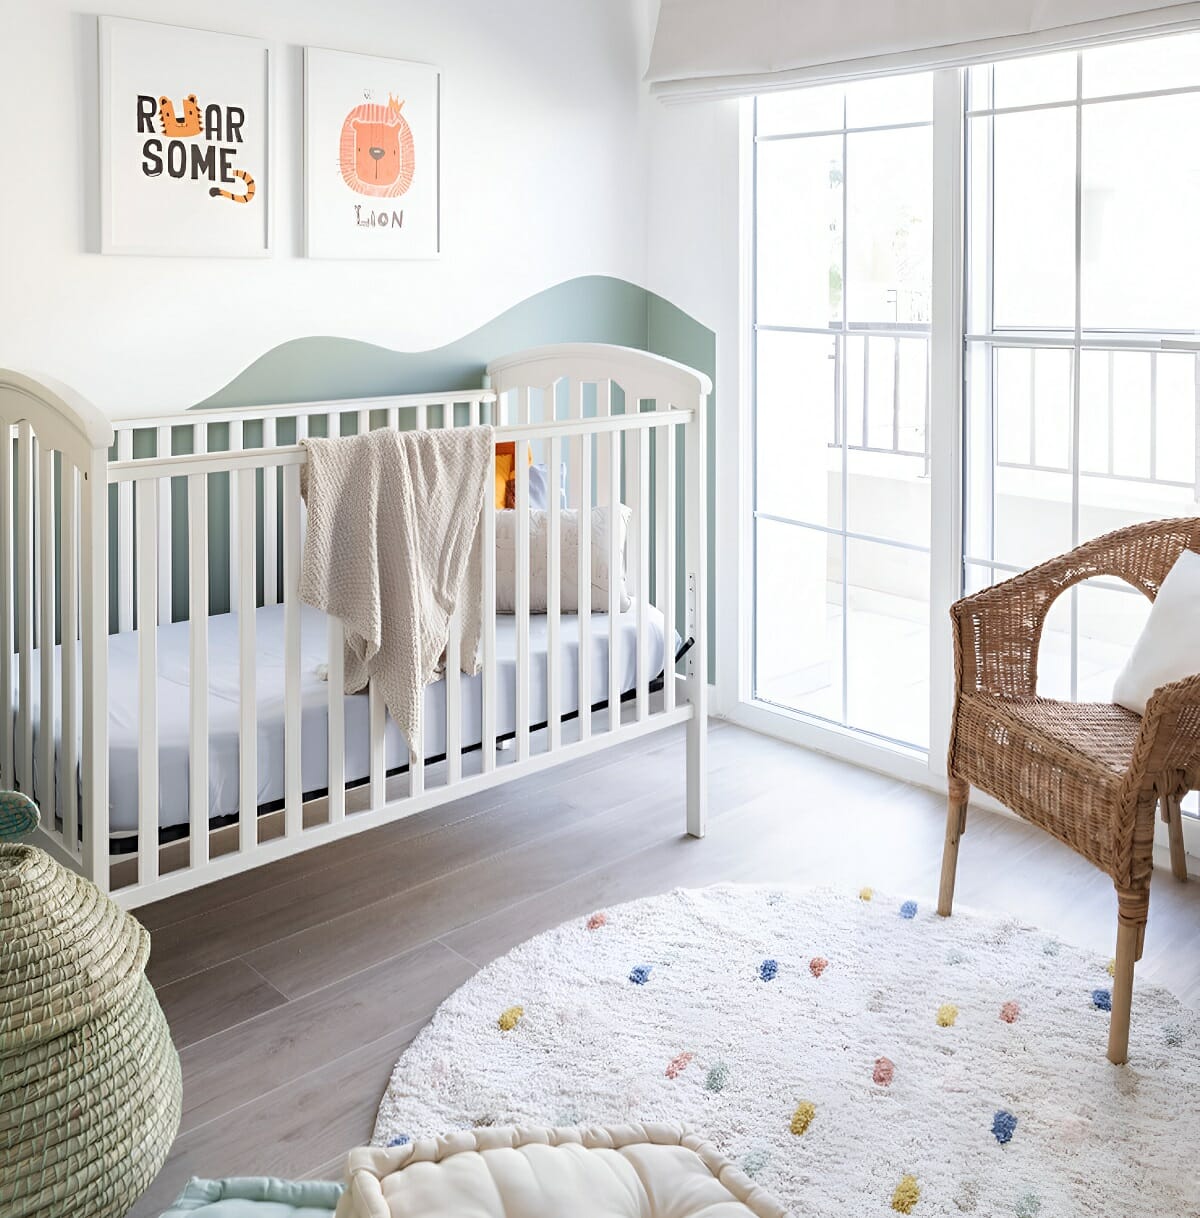 Nursery Room Decor Ideas: Designer Interiors for Wee Ones - Decorilla  Online Interior Design